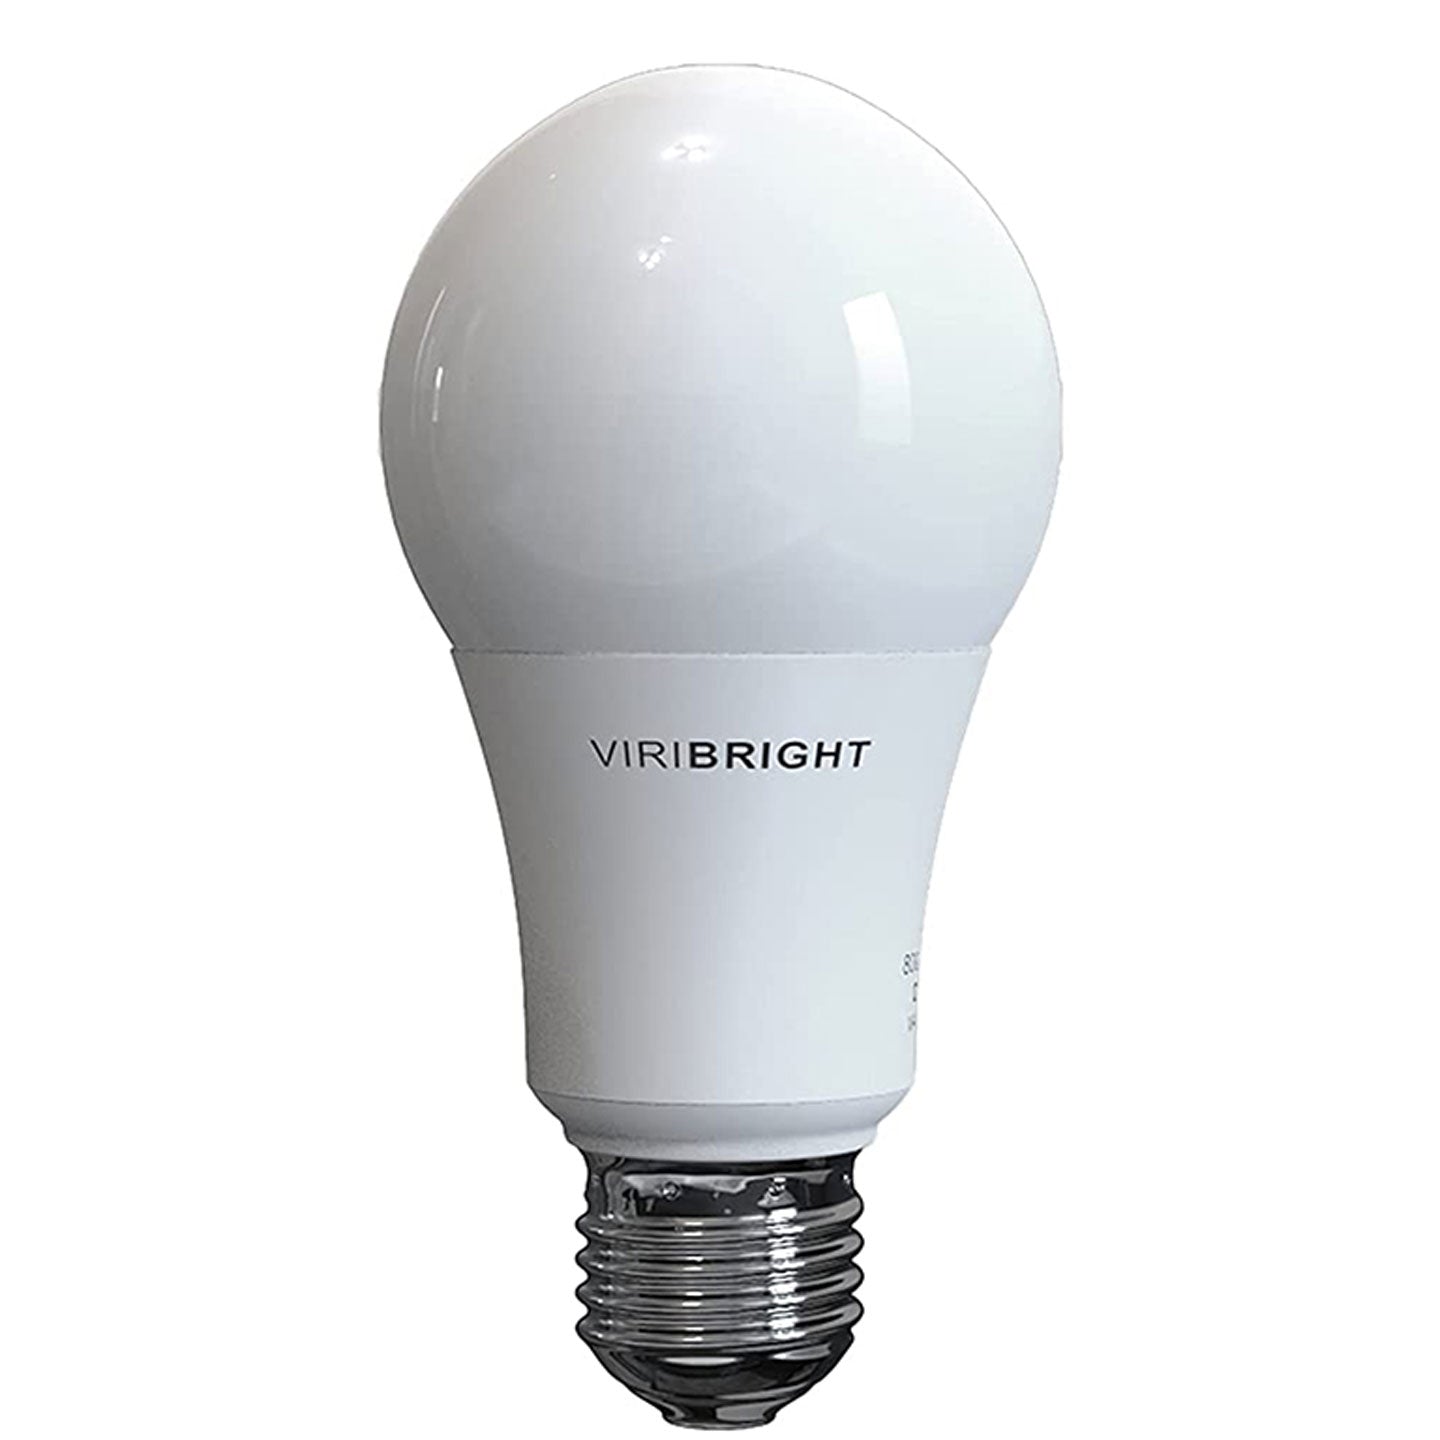 75-Watt Equivalent Low Volt 12v - 24v DC LED Light Bulb